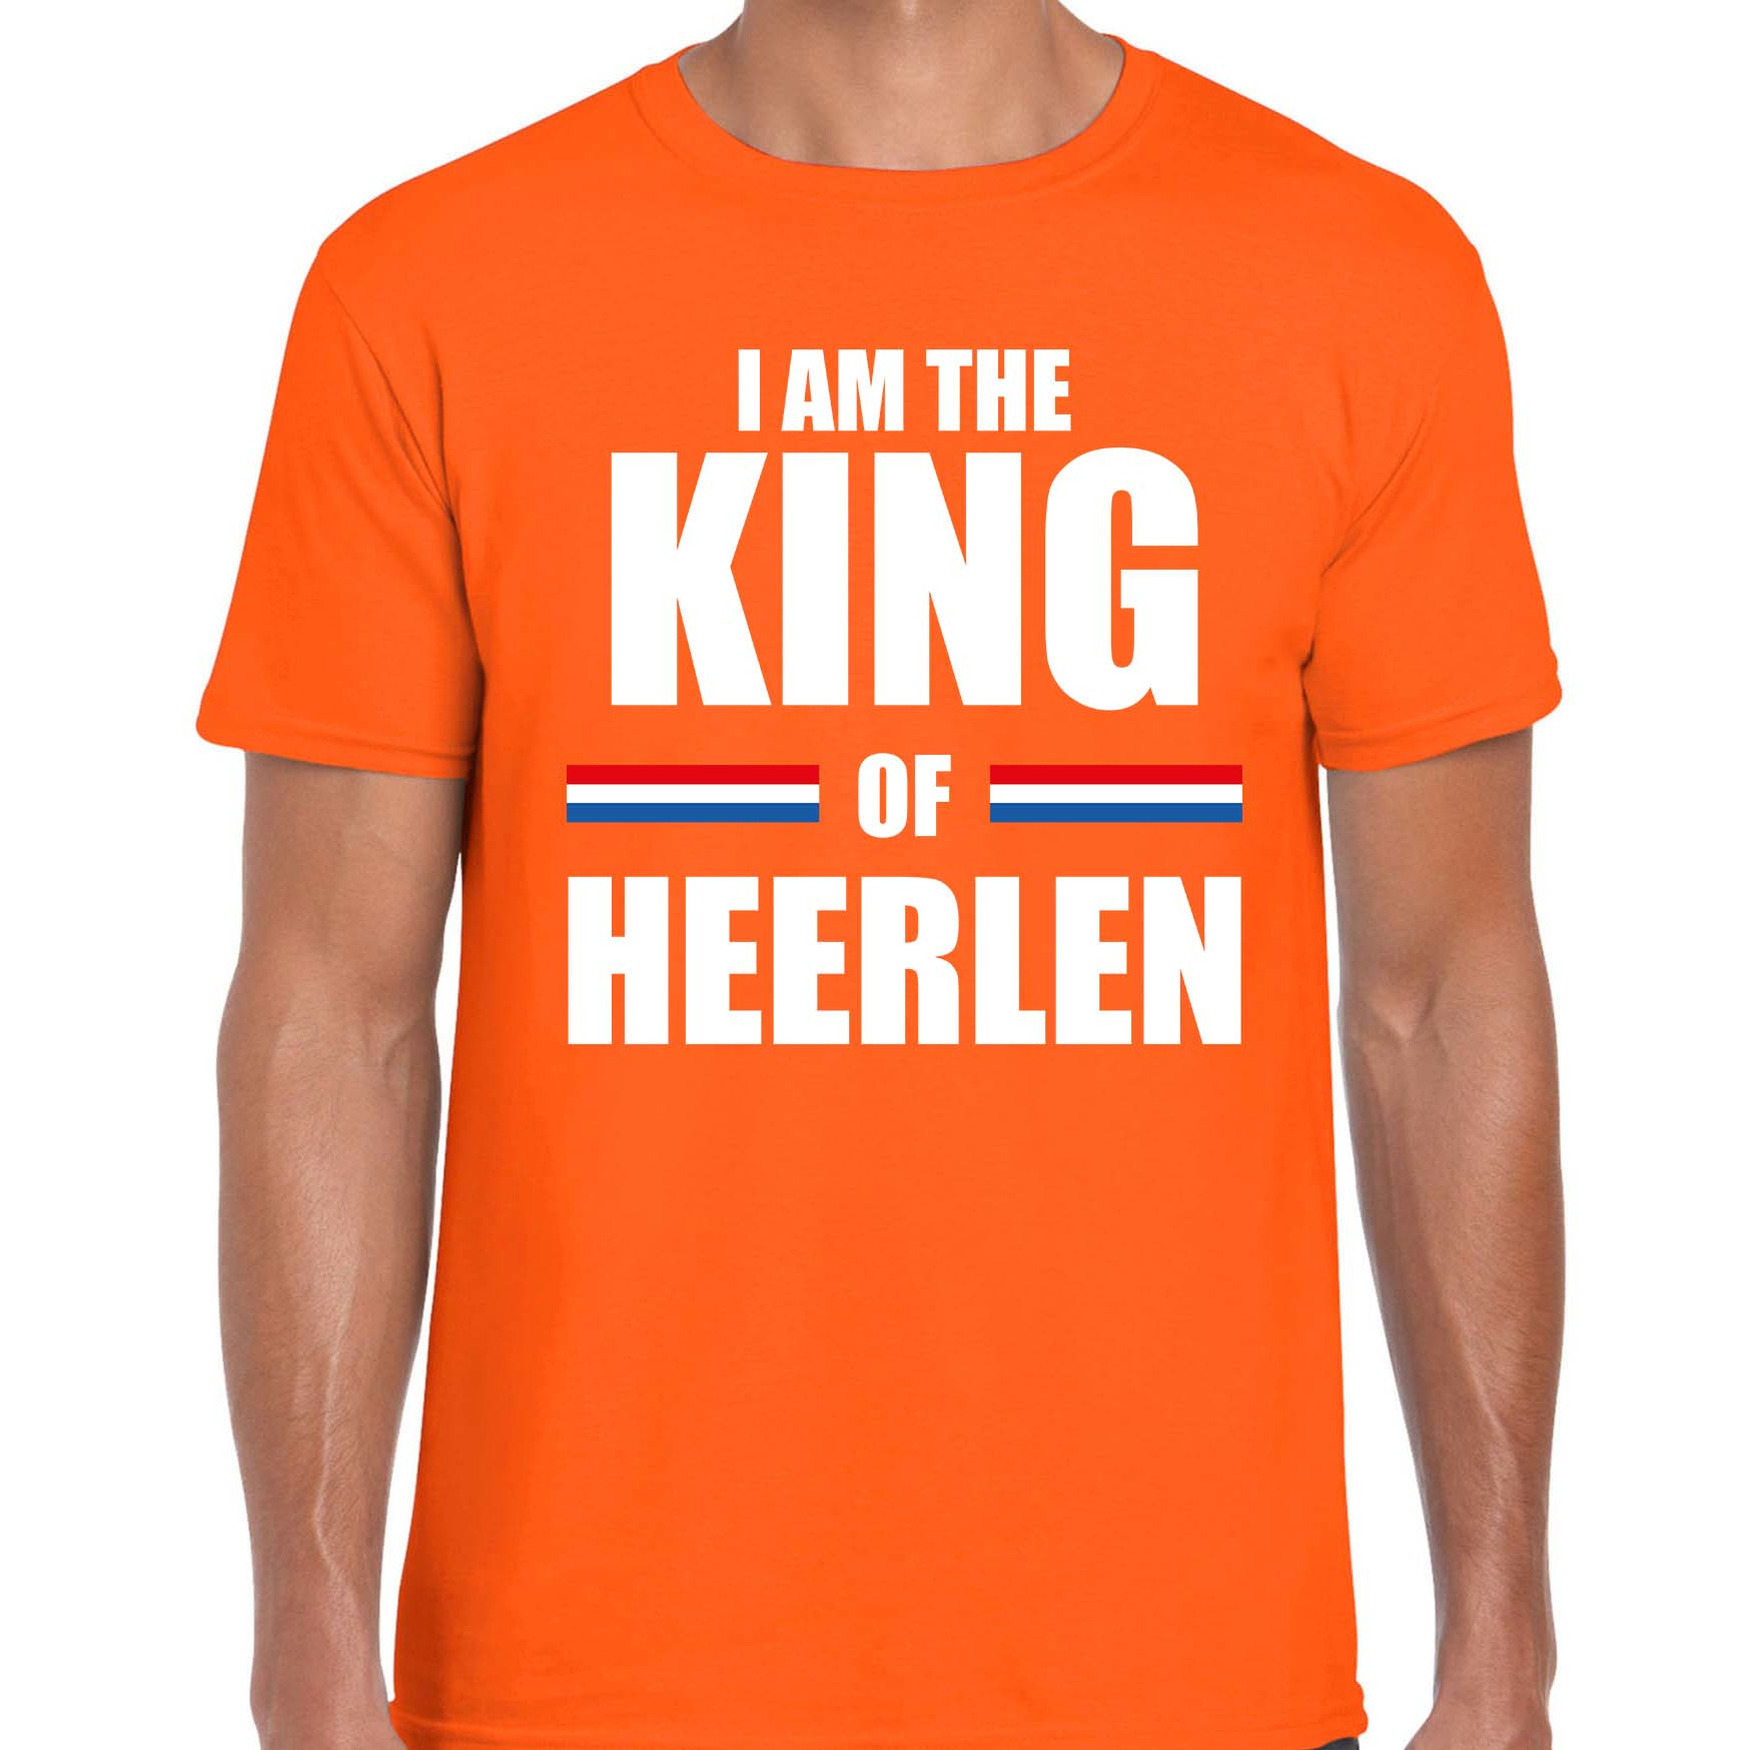 Feest t-shirt voor heren I am the King of Haarlem oranje Koningsdag